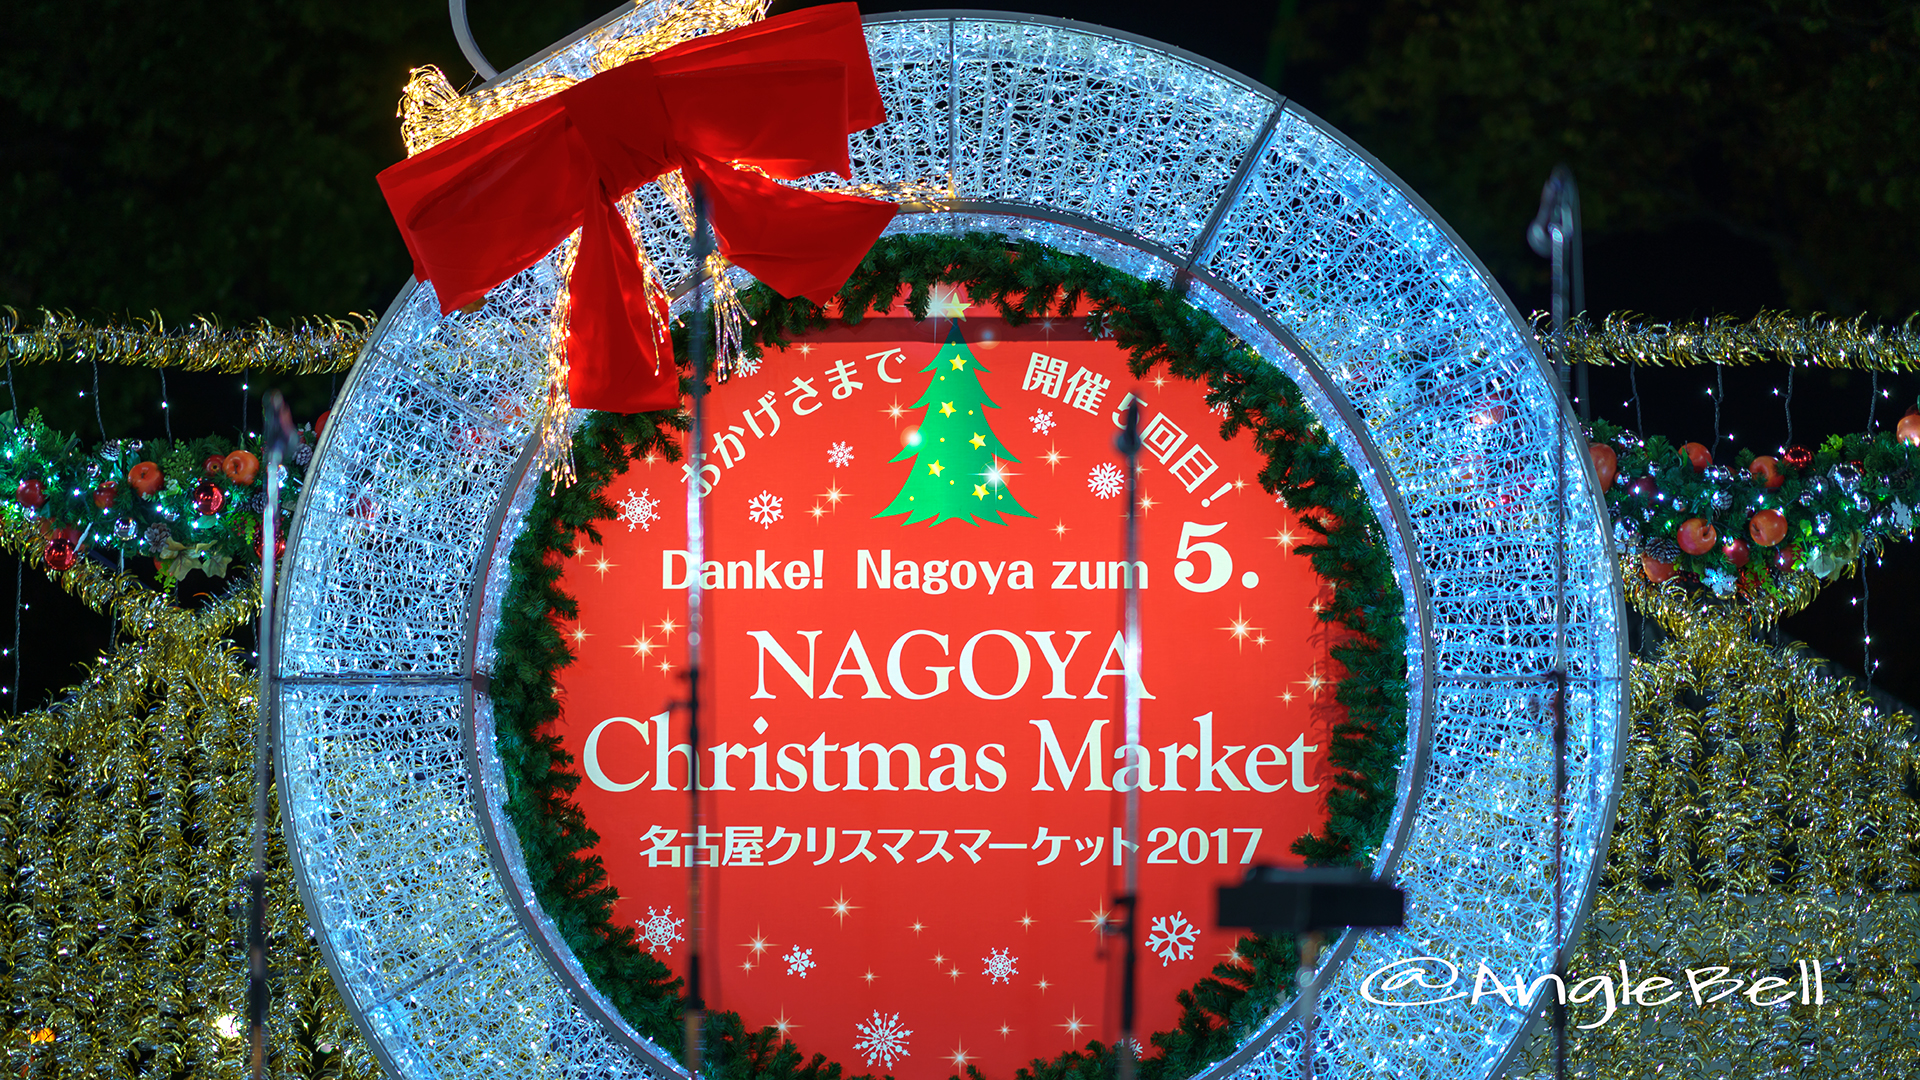 NAGOYA Christmas Market 2017